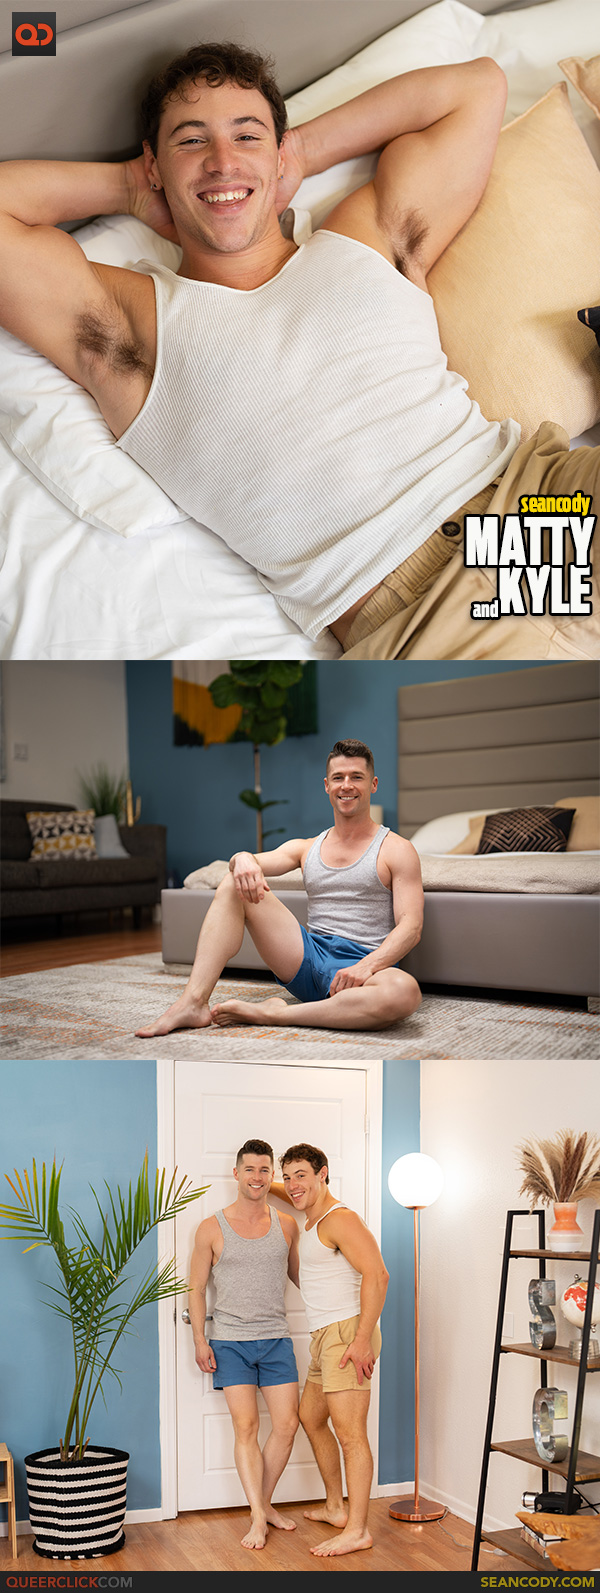 Sean Cody: Kyle Fletcher and Matty